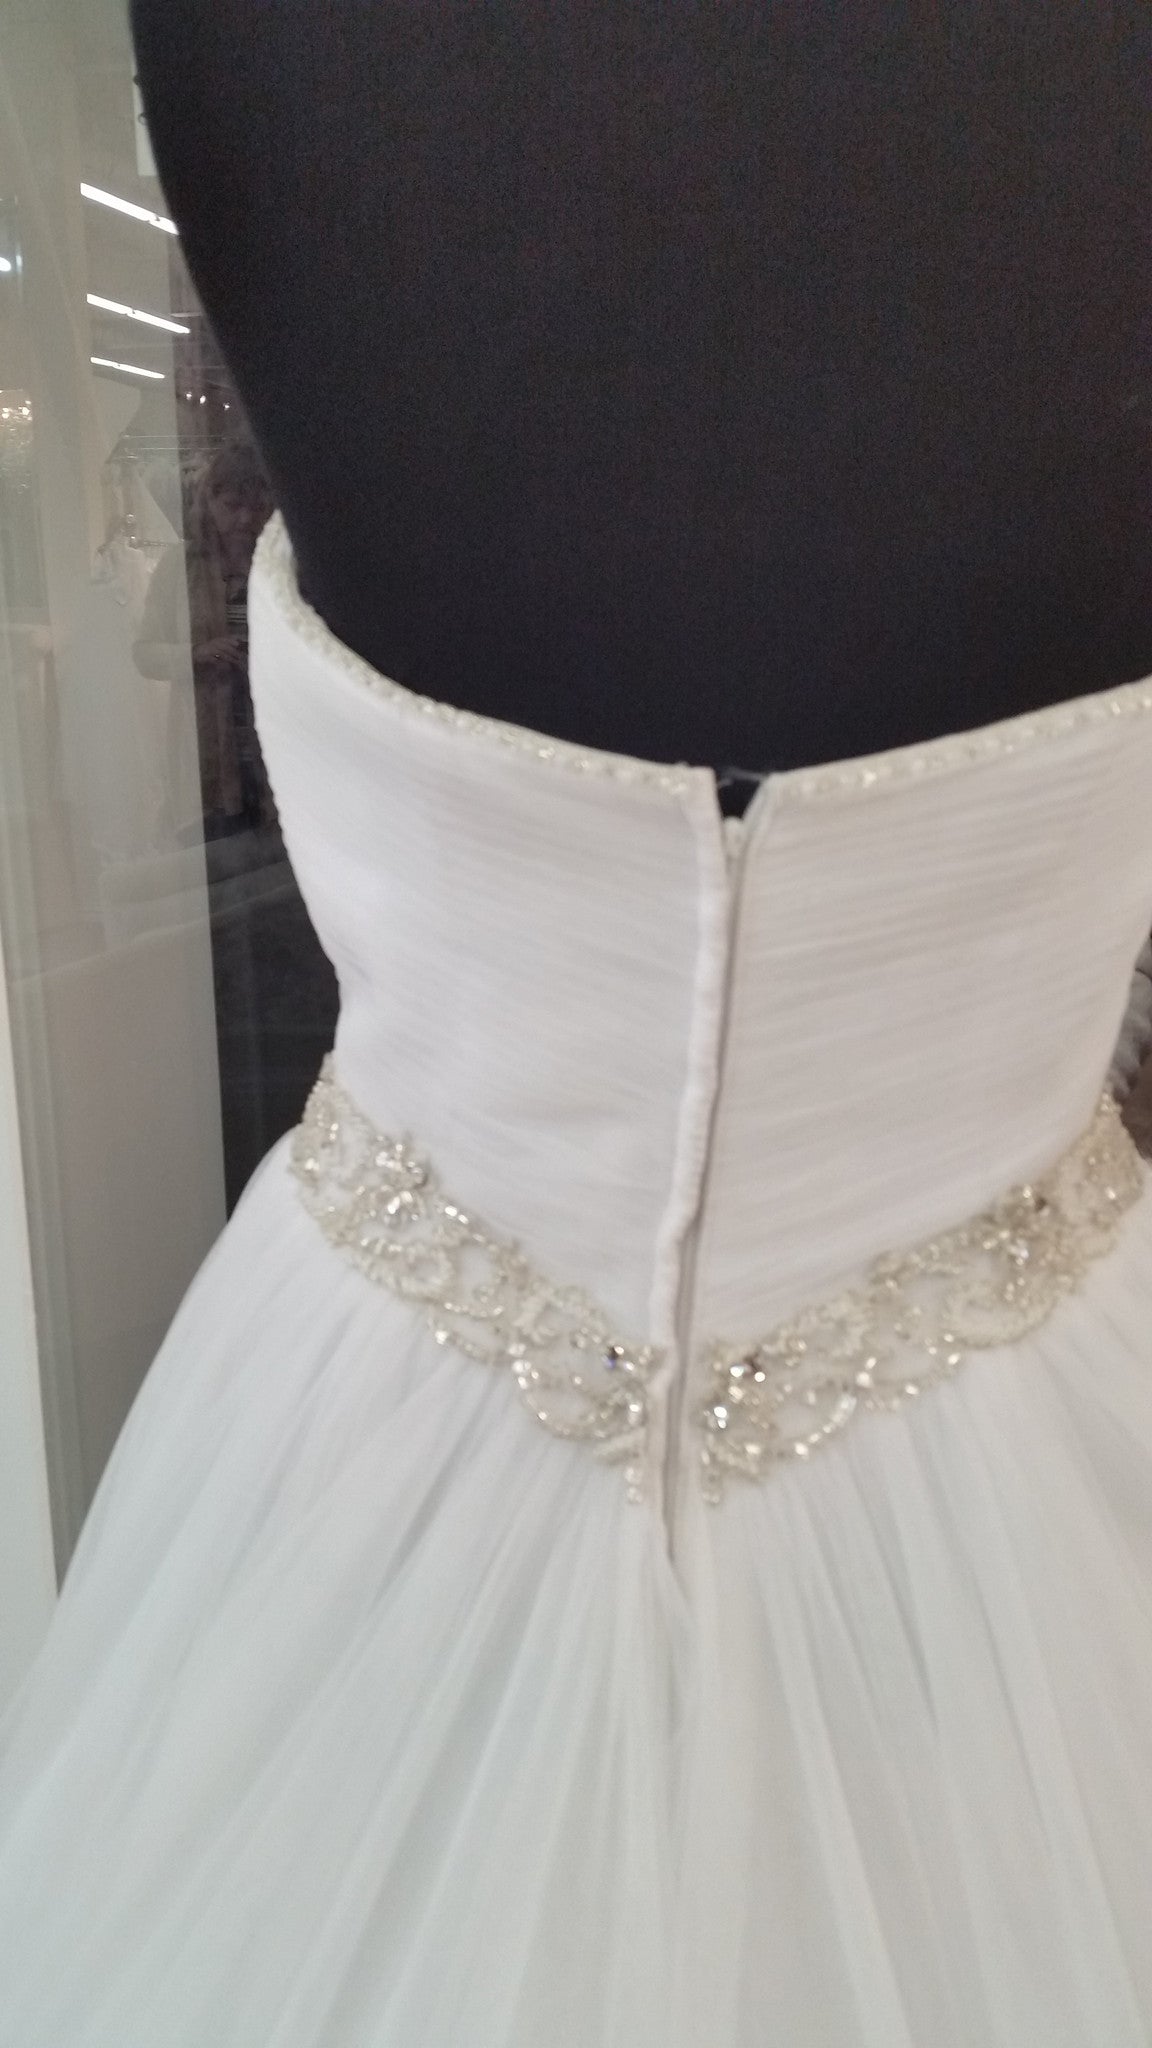 Alfred Angelo '0002713556' size 6 new wedding dress – Nearly Newlywed